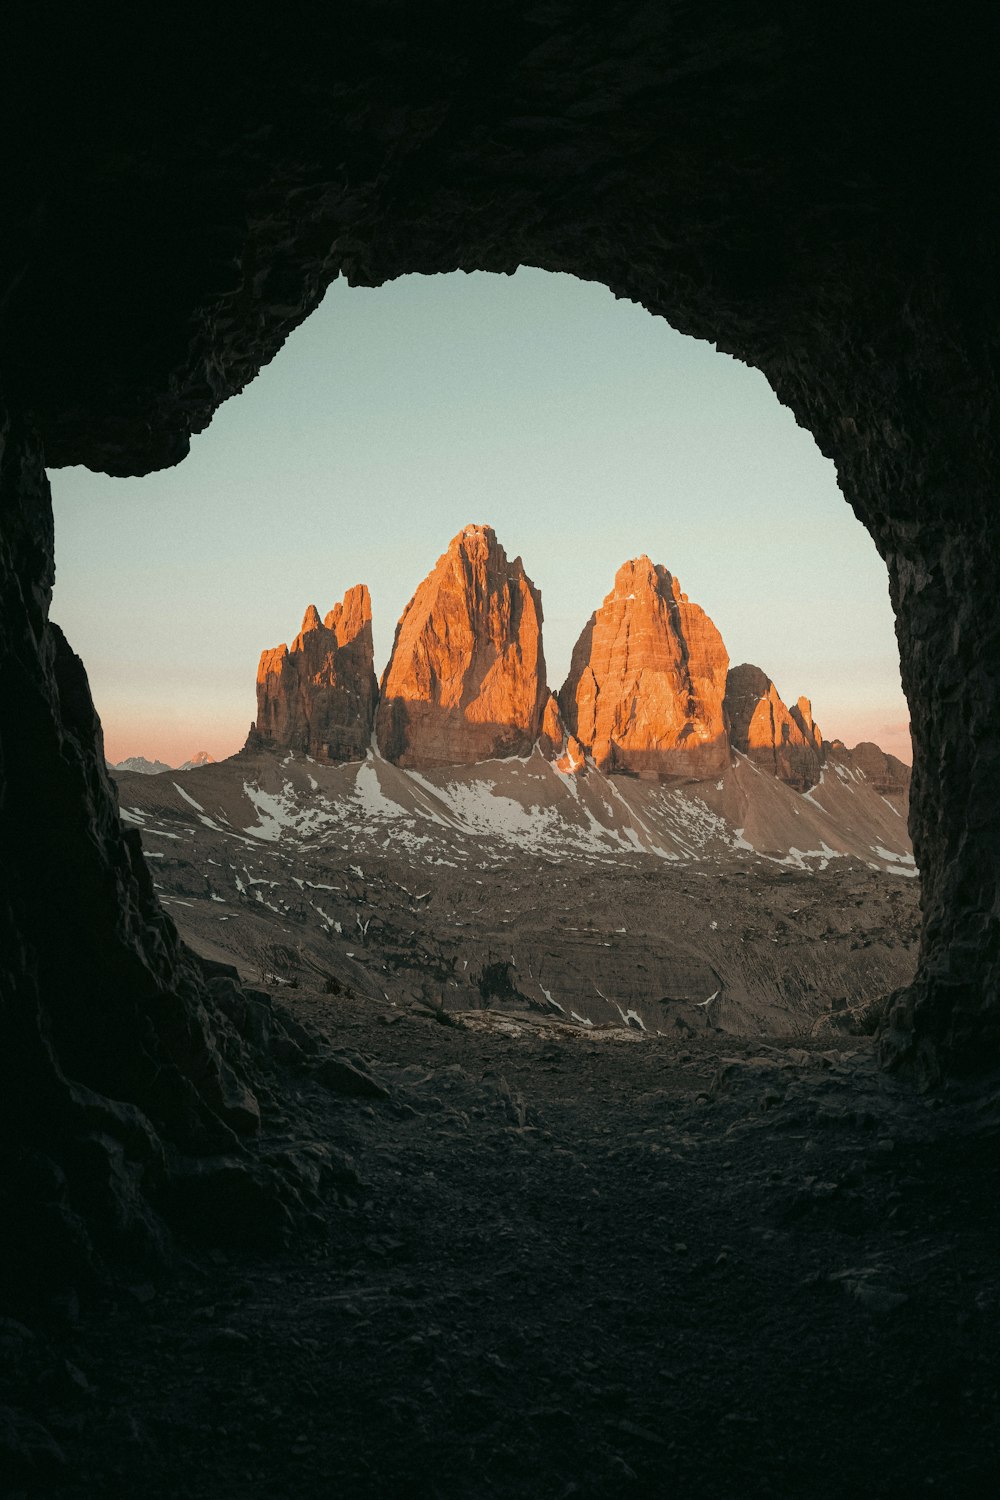 Una veduta di una catena montuosa attraverso una grotta